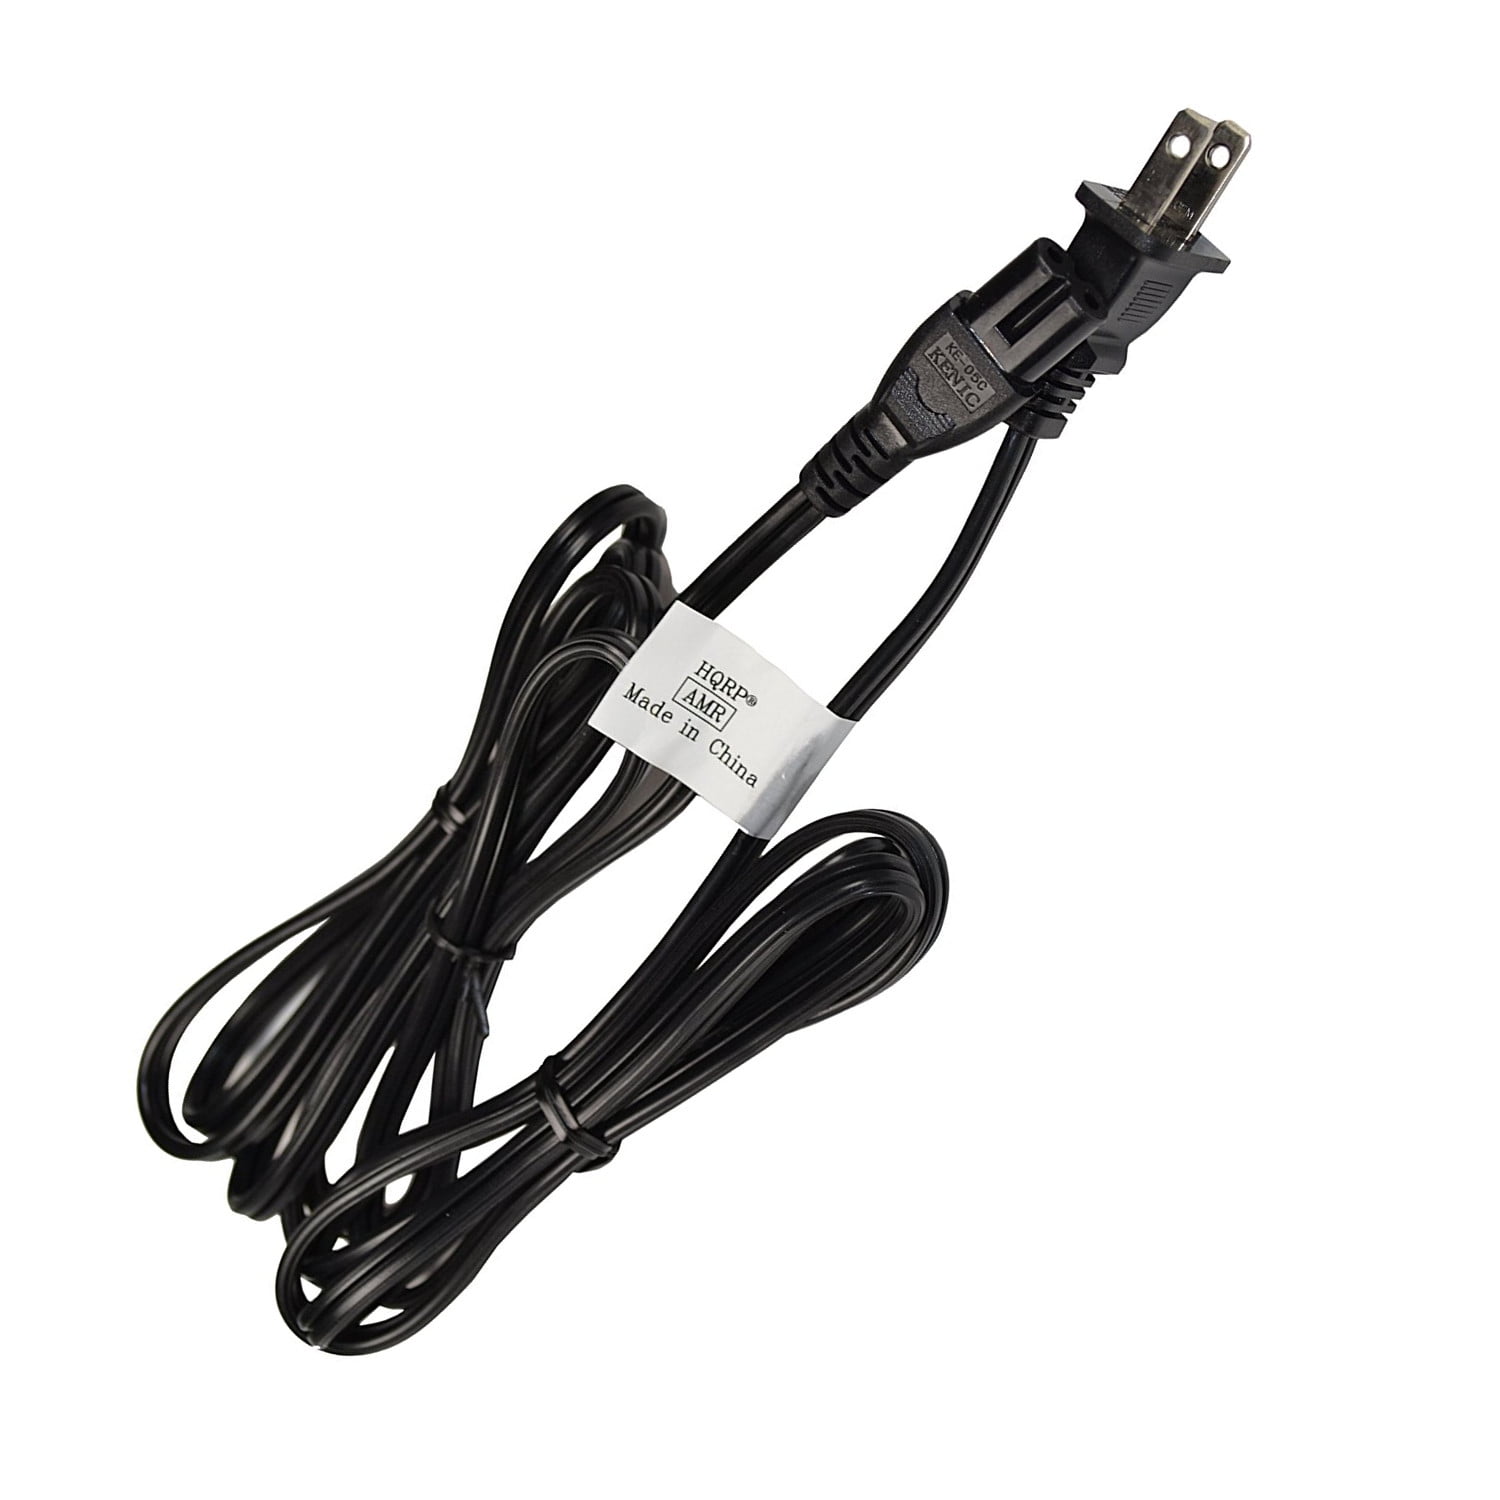 TEKBYUS EAD61909202 AC Power Cord Cable for Model TV 55UF6430 55UF6790 55UF6800 43UF6400 49UF6400 